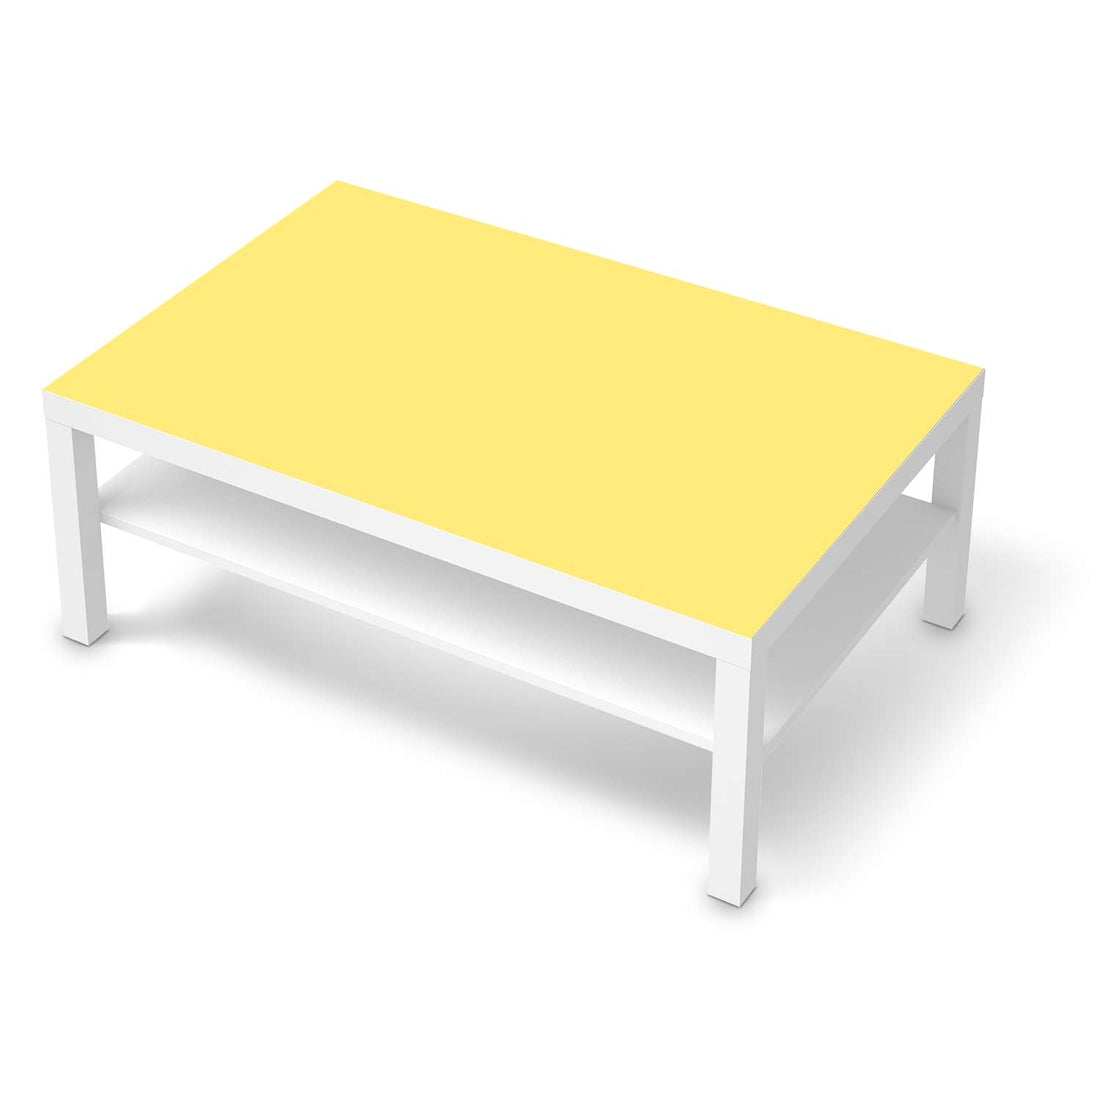 Klebefolie Gelb Light - IKEA Lack Tisch 118x78 cm - weiss